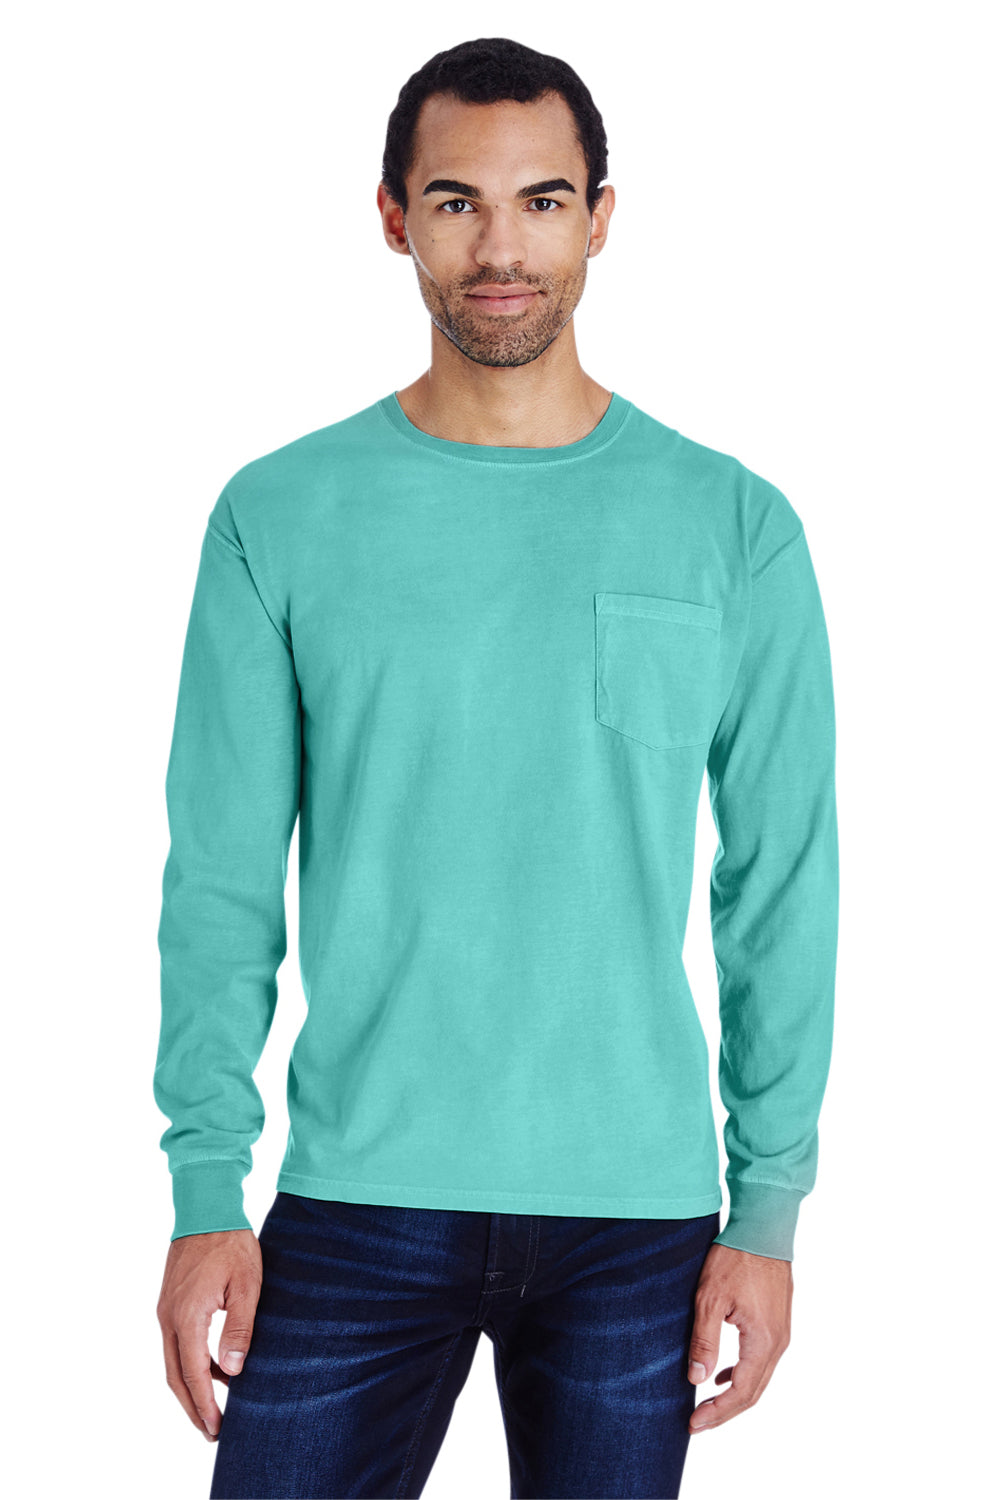 ComfortWash By Hanes GDH250 Mens Long Sleeve Crewneck T-Shirt w/ Pocket Mint Green Front